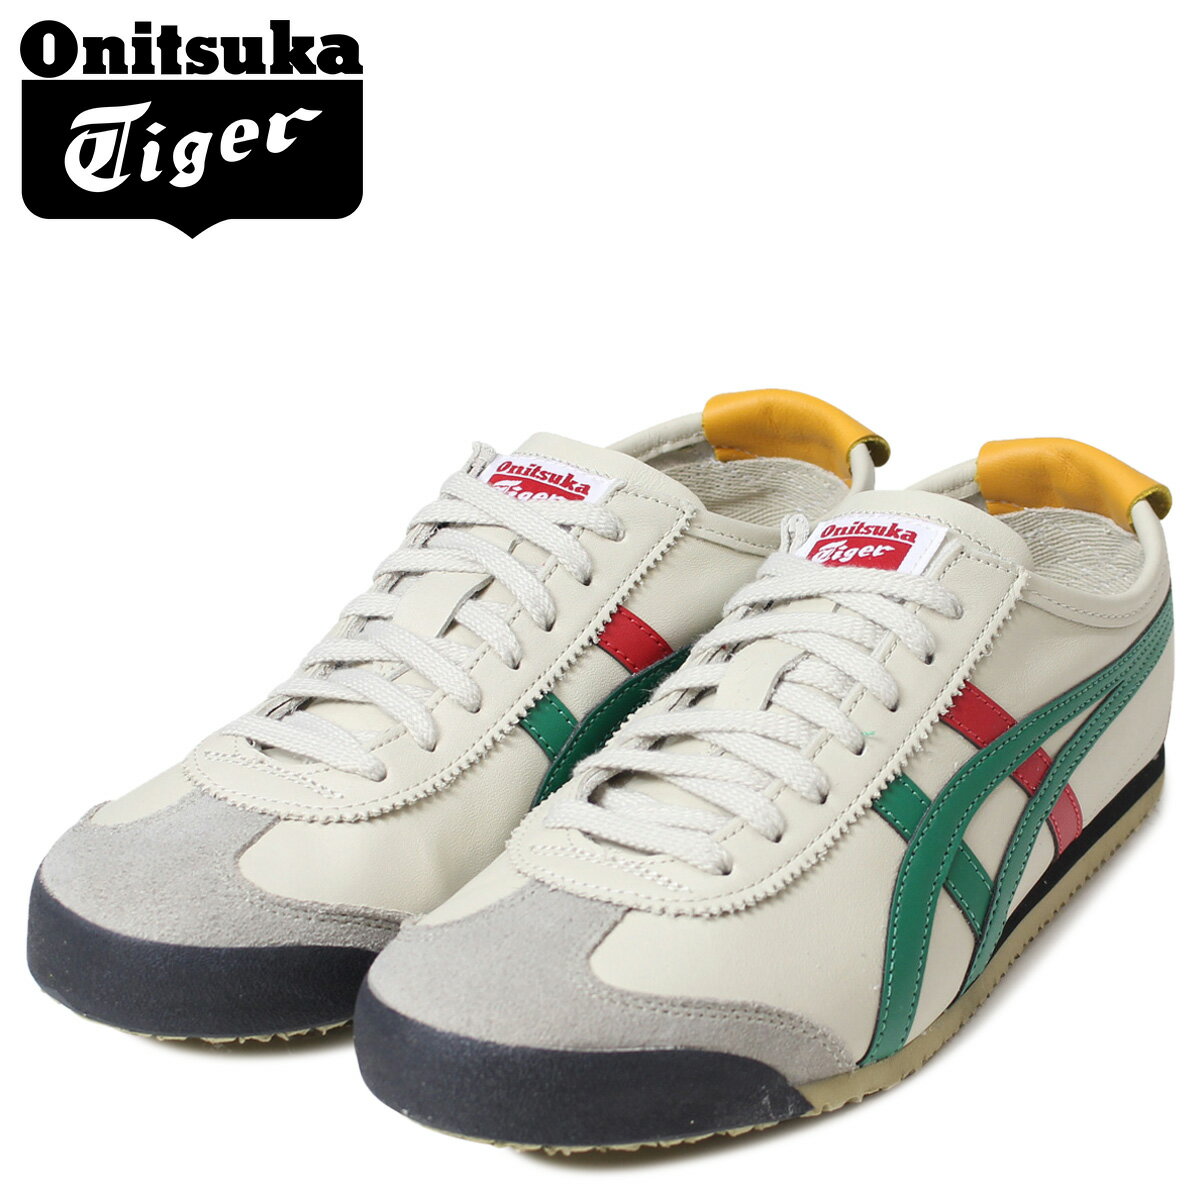 latest onitsuka tiger shoes japan